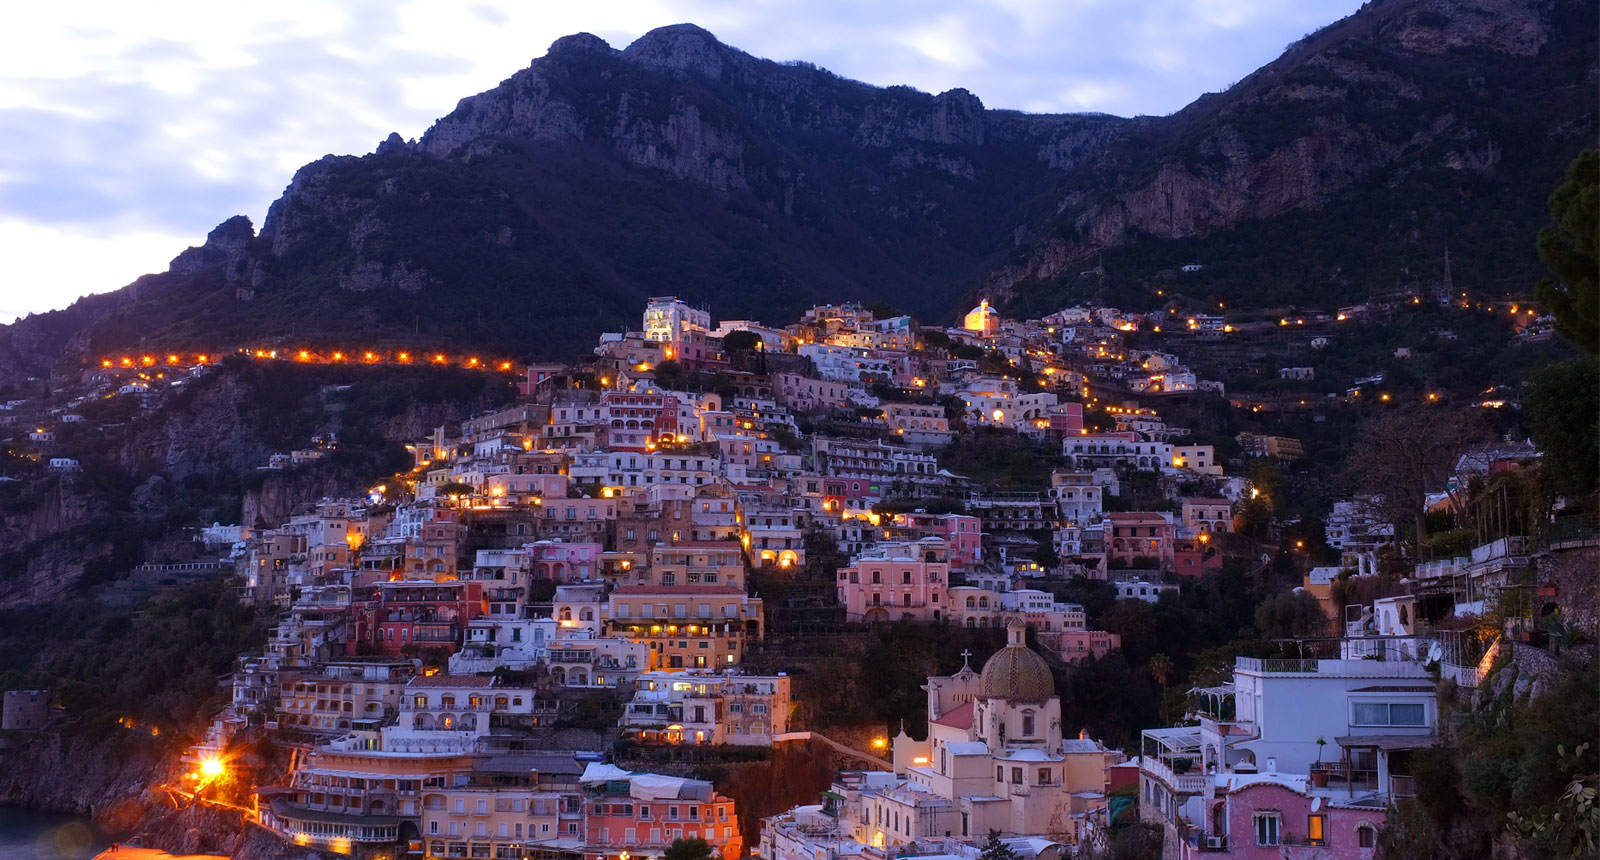 Capri - The island of love